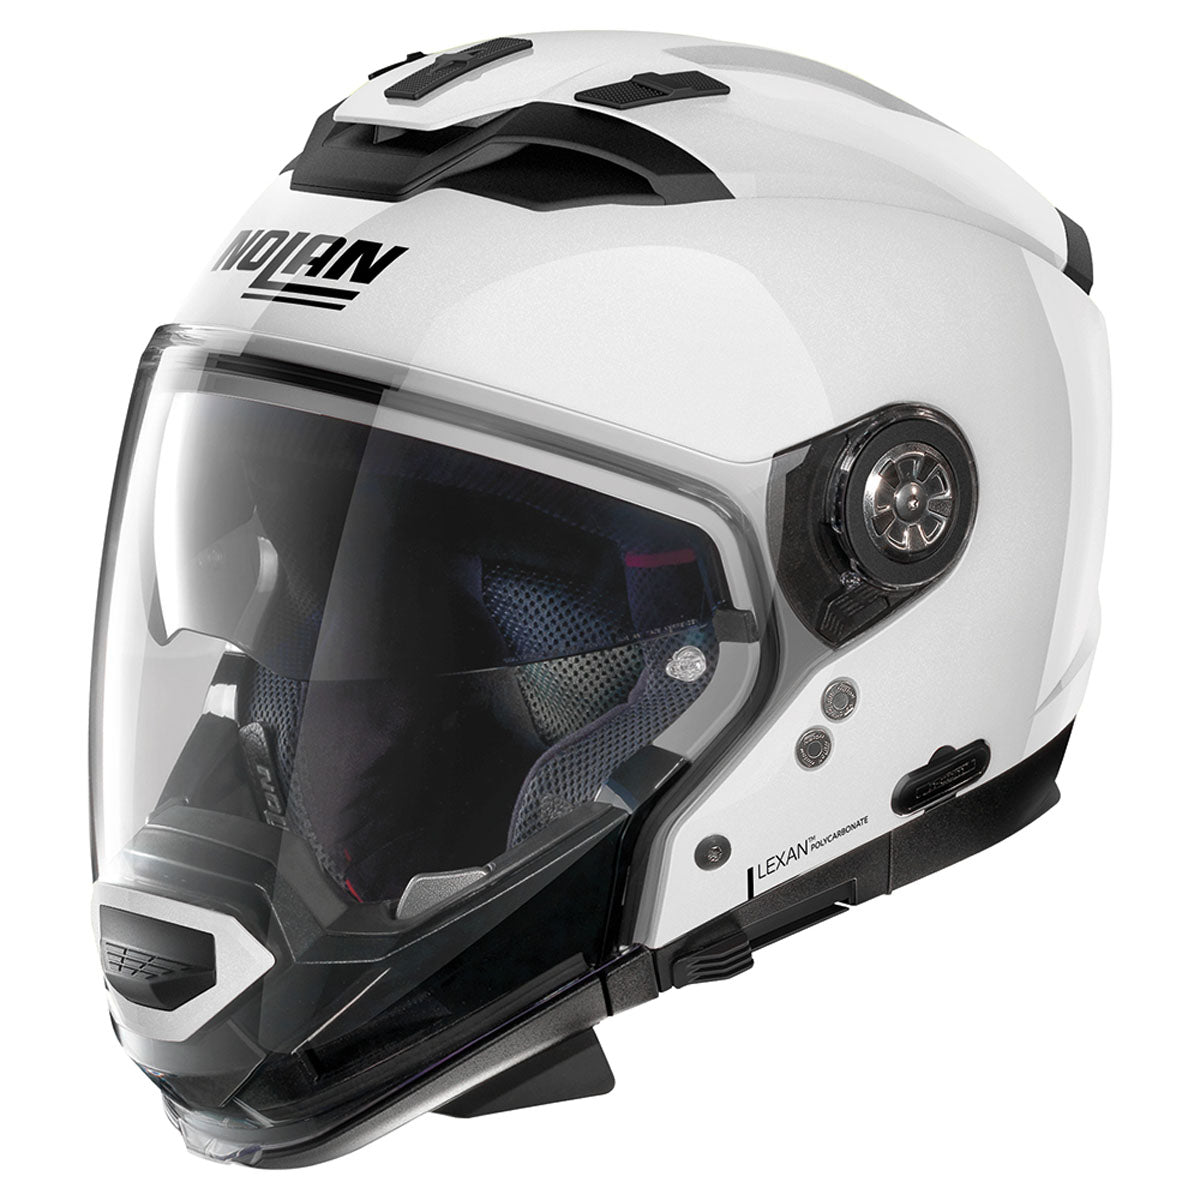 Nolan N70-2 GT Solid Helmet - White